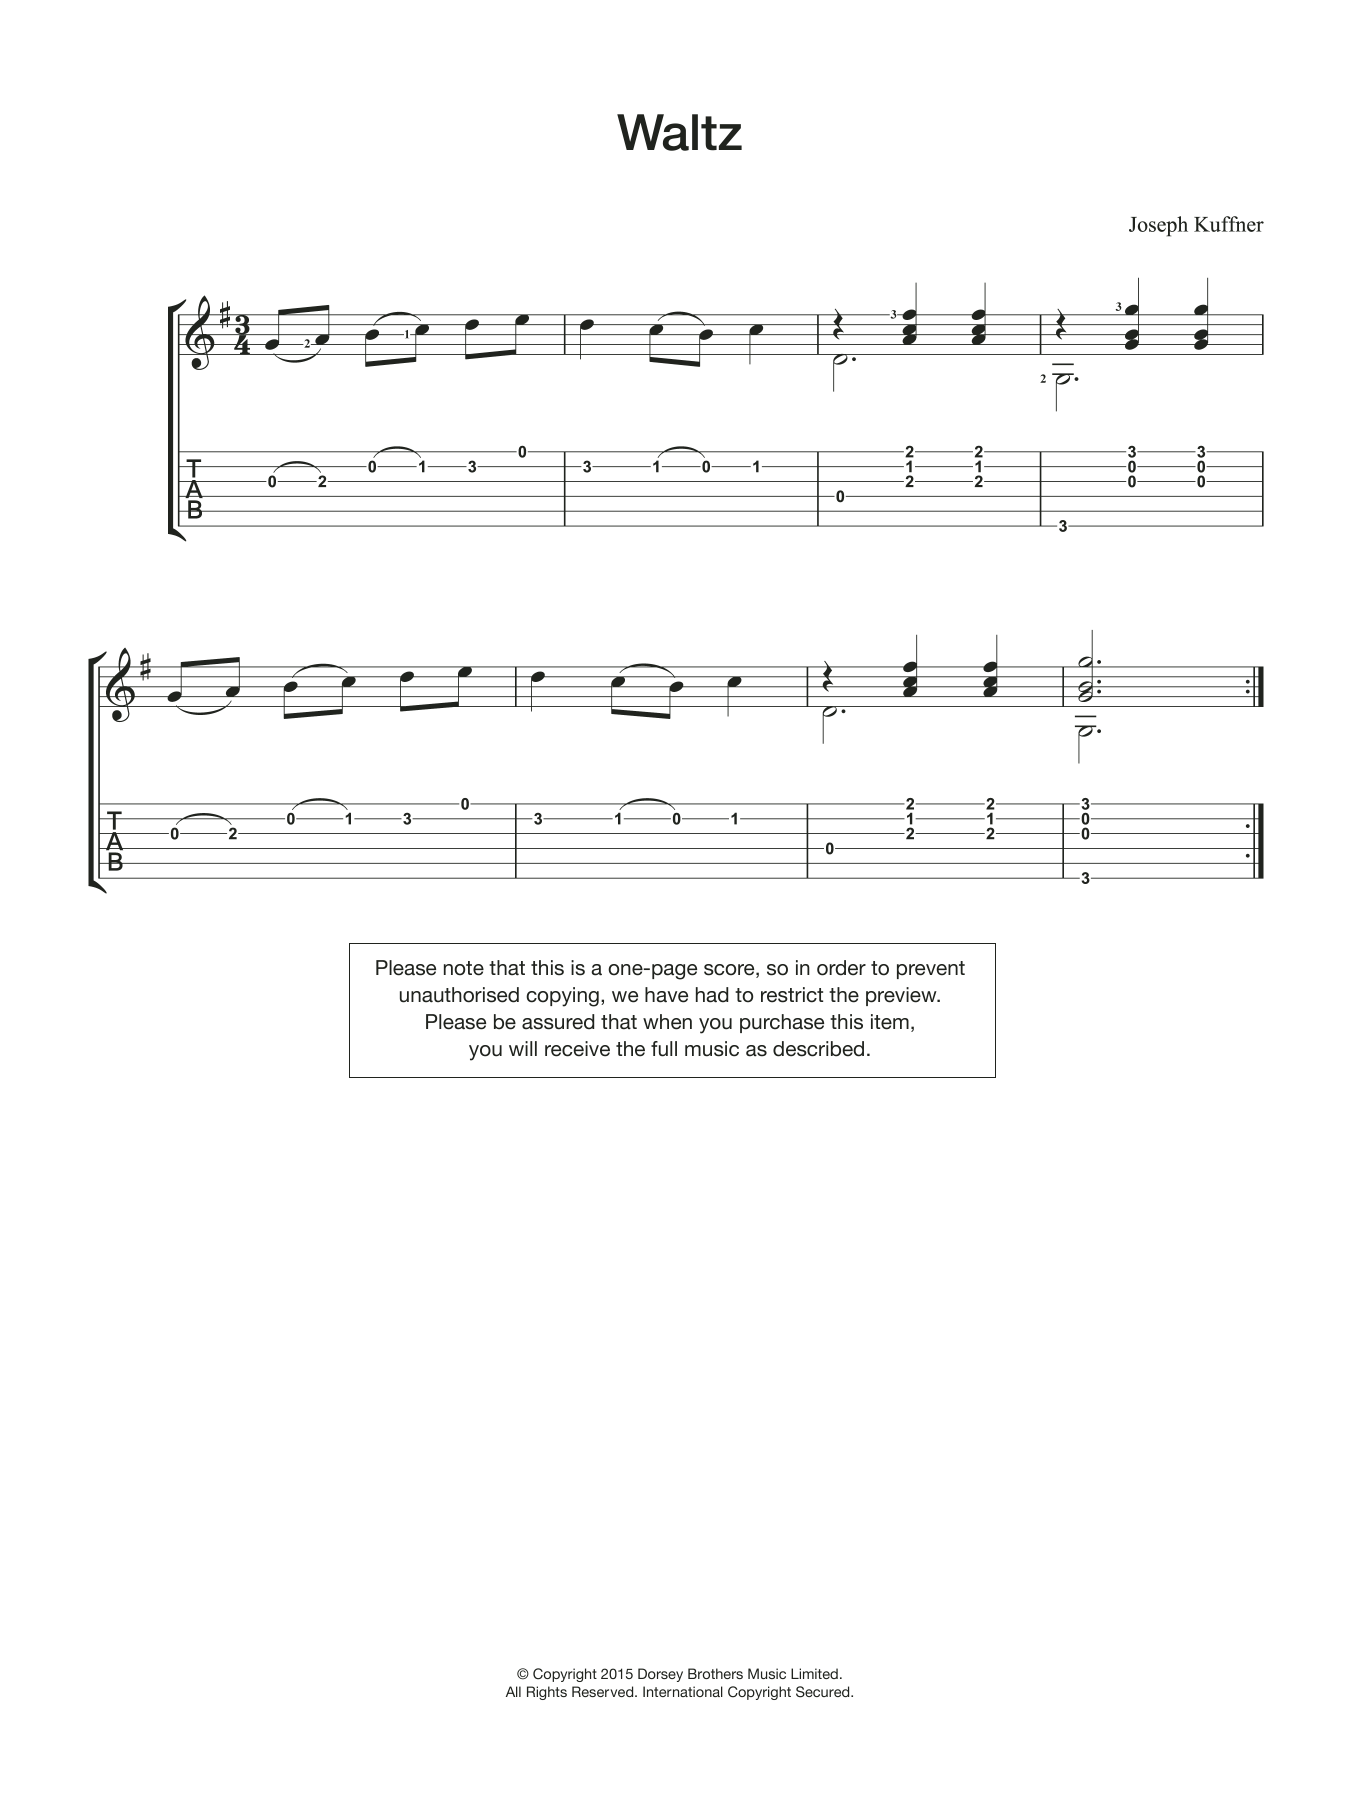 Joseph Kuffner Waltz Sheet Music Notes & Chords for Guitar - Download or Print PDF